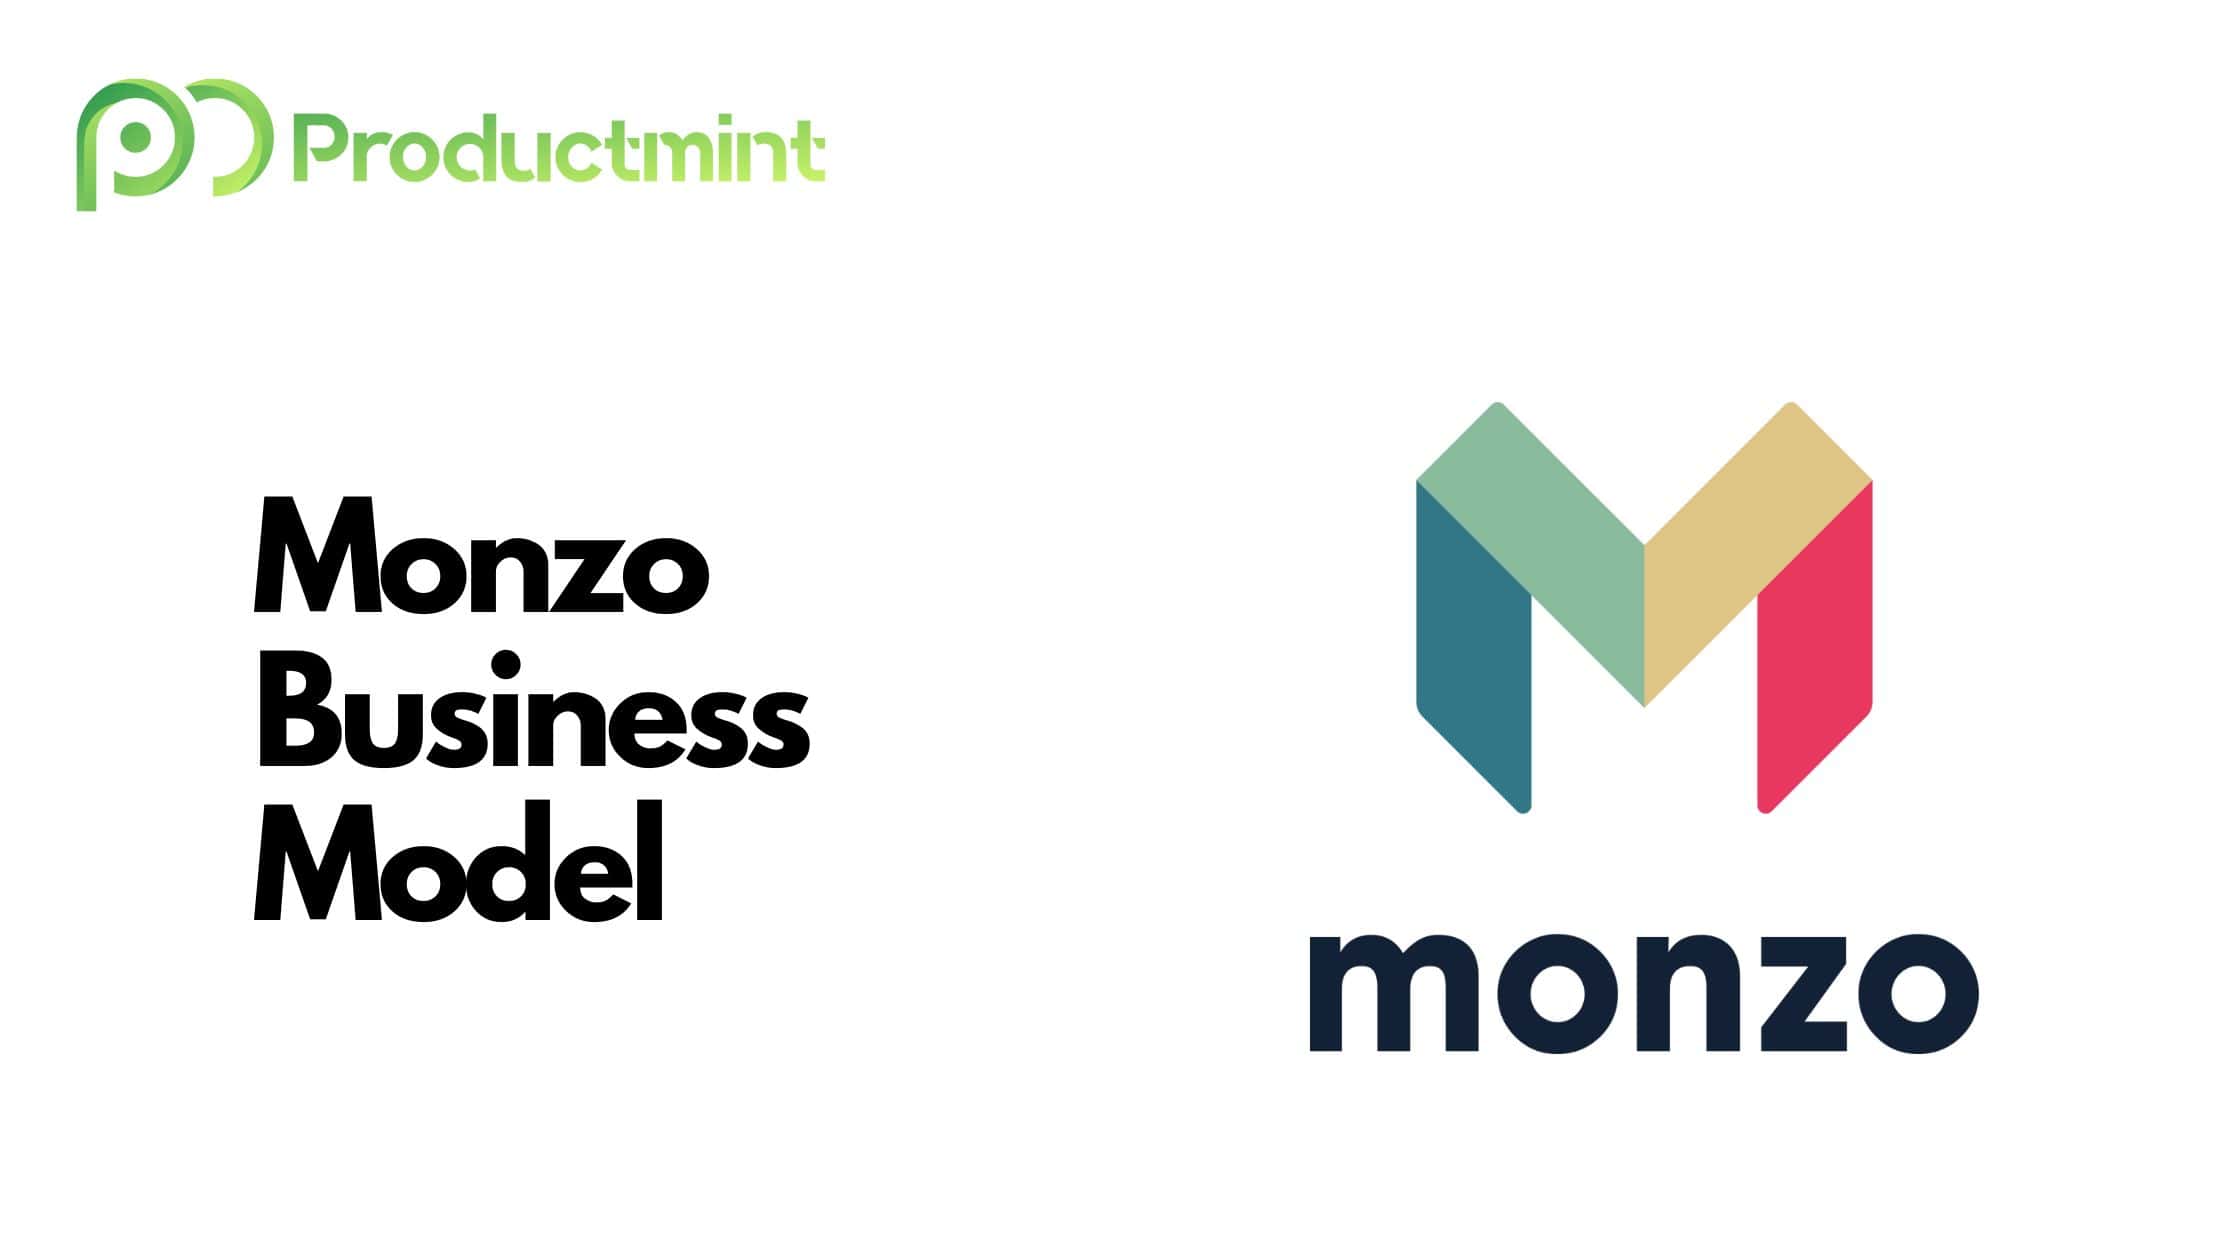 Monzo Business Model